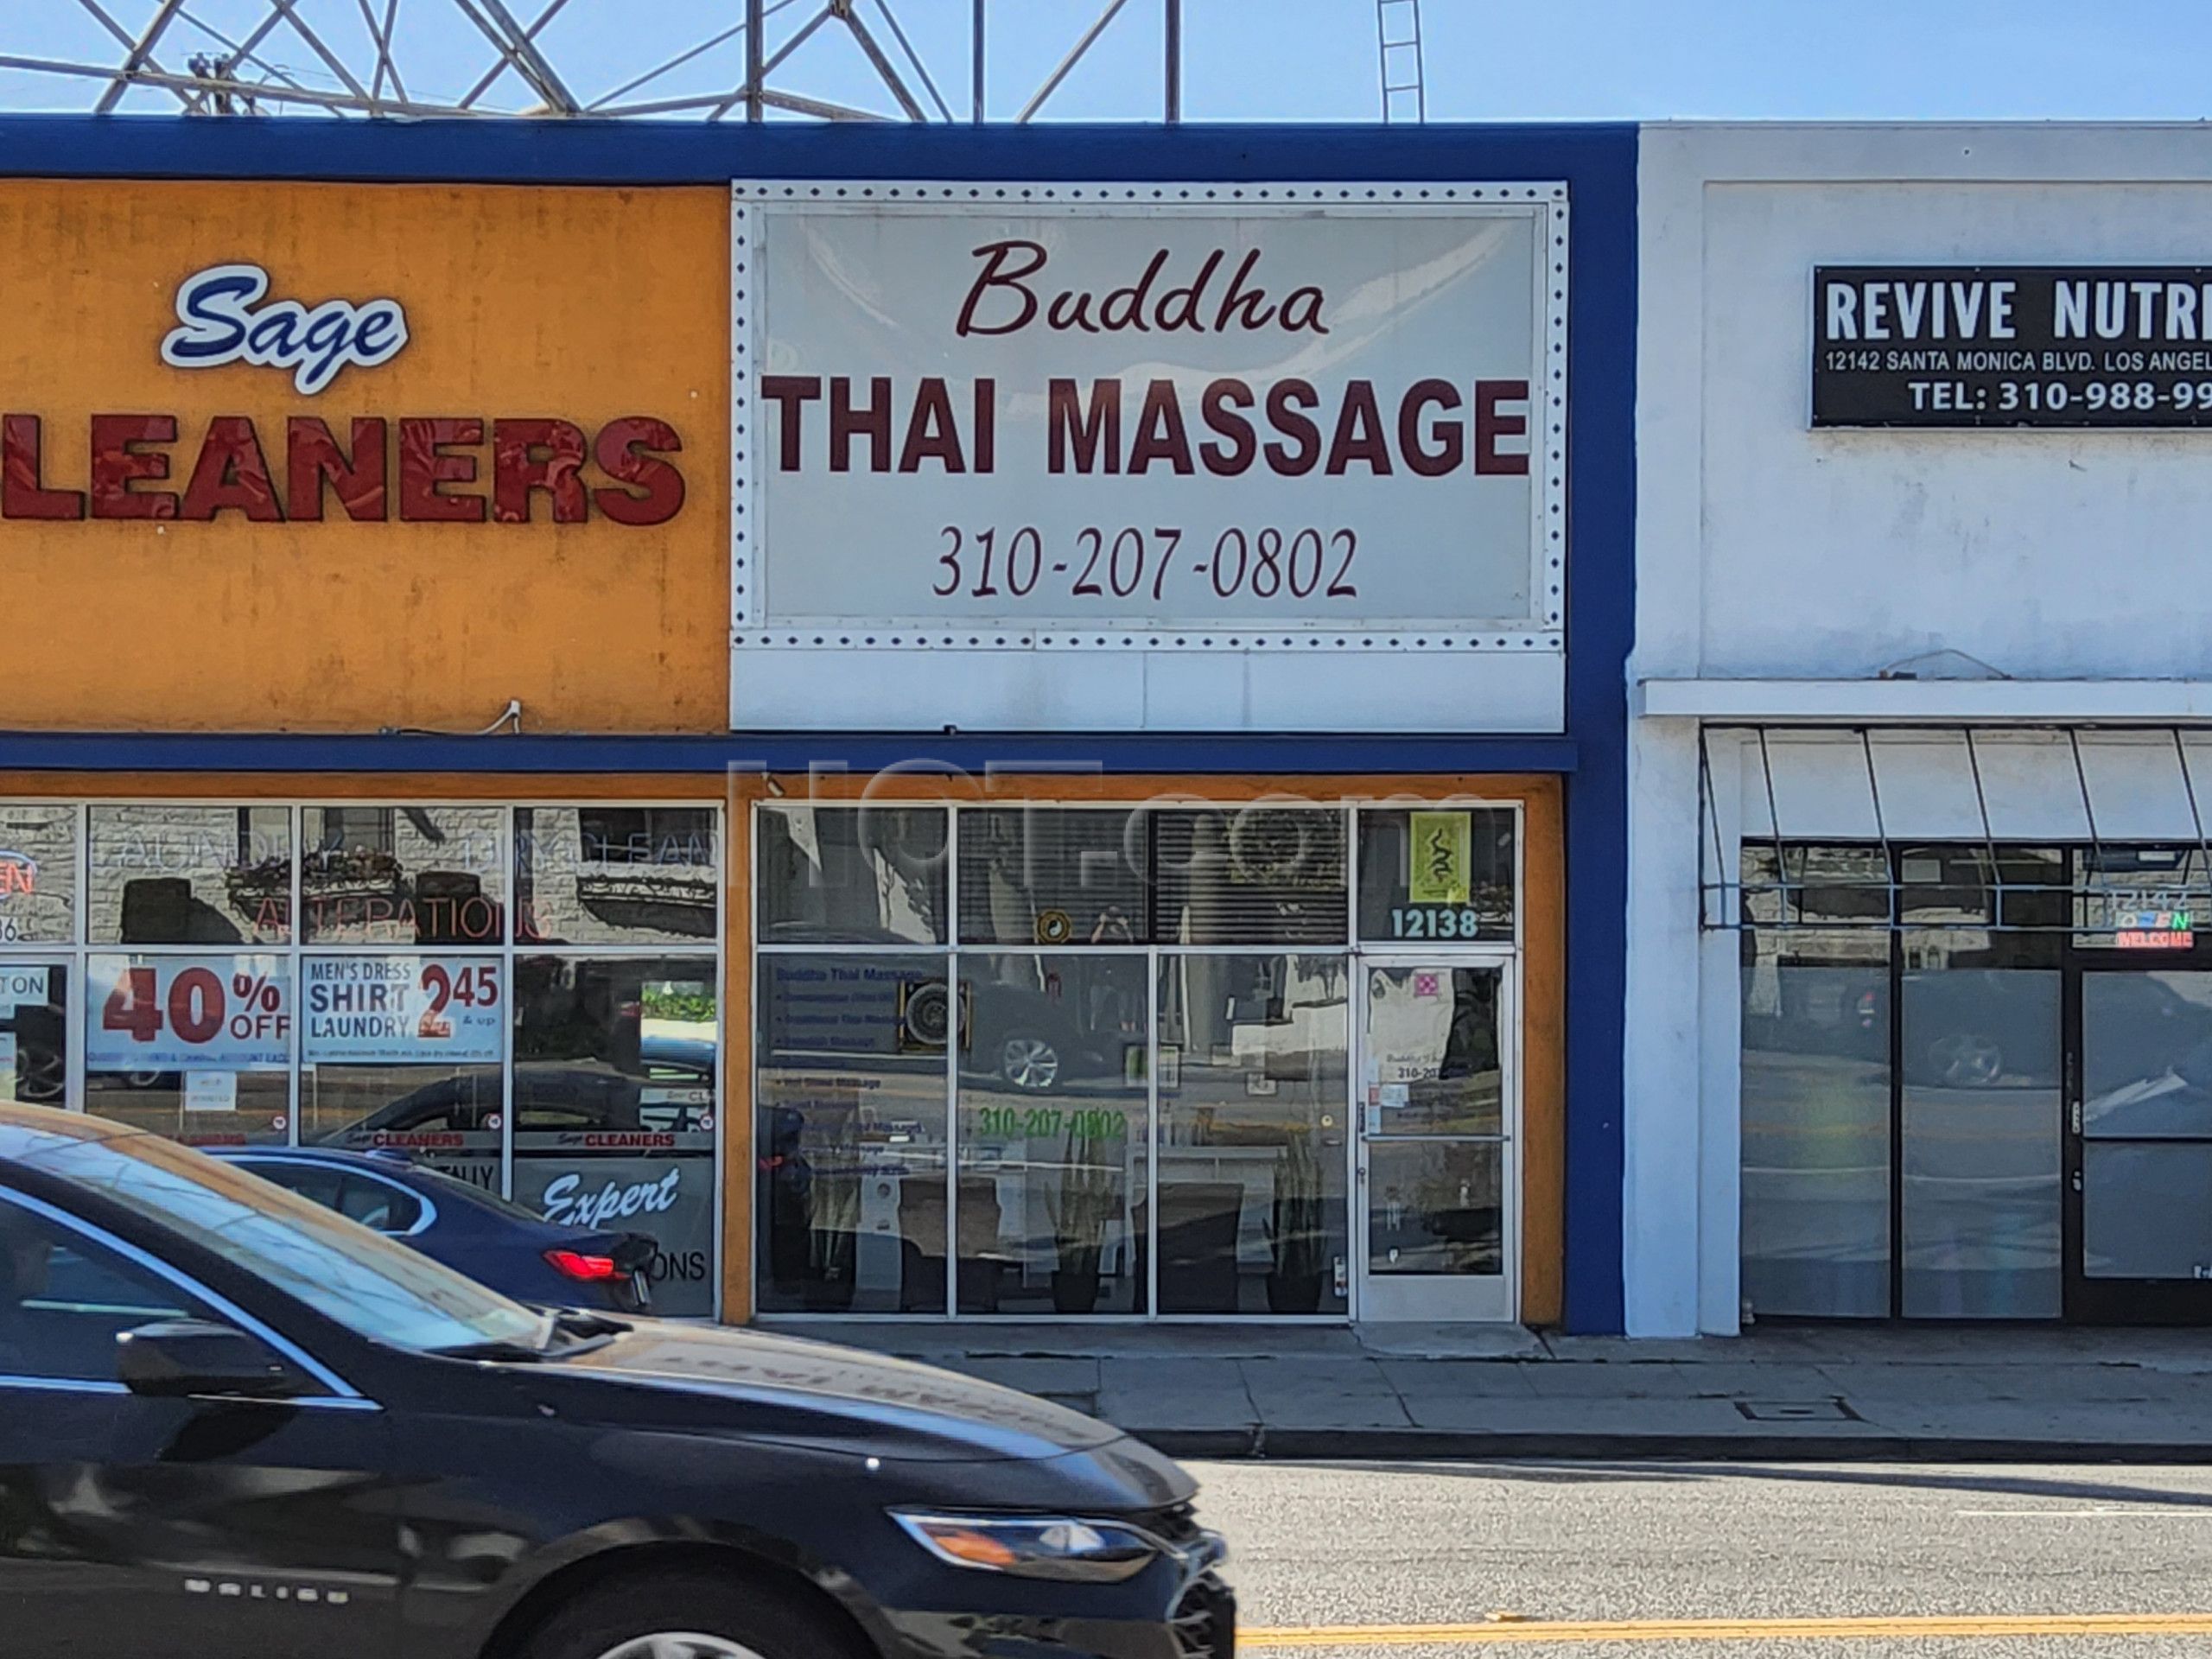 Los Angeles, California Buddha Thai Massage